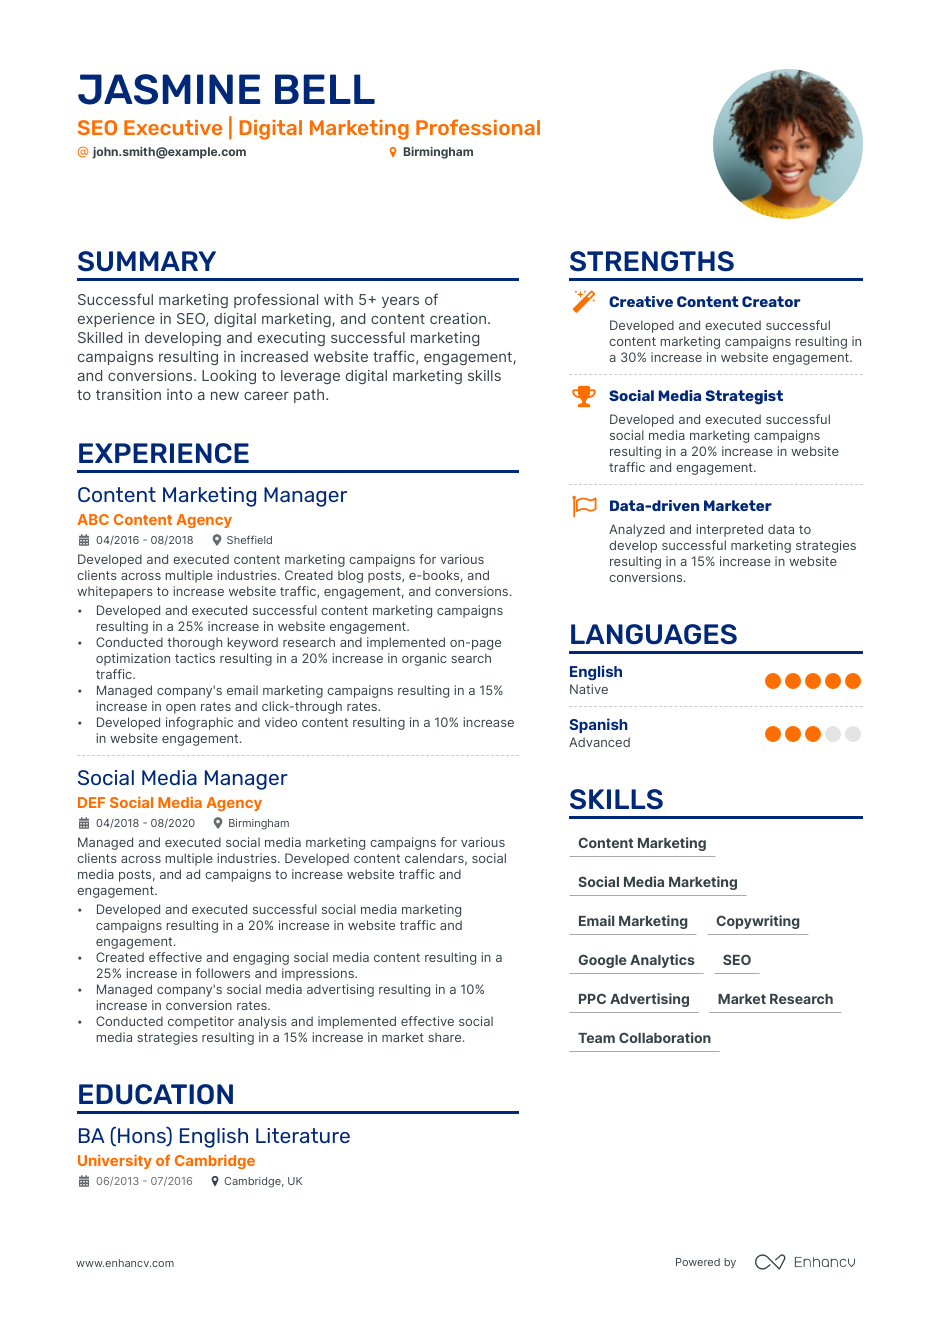 SEO Executive | Digital Marketing Professional CV example